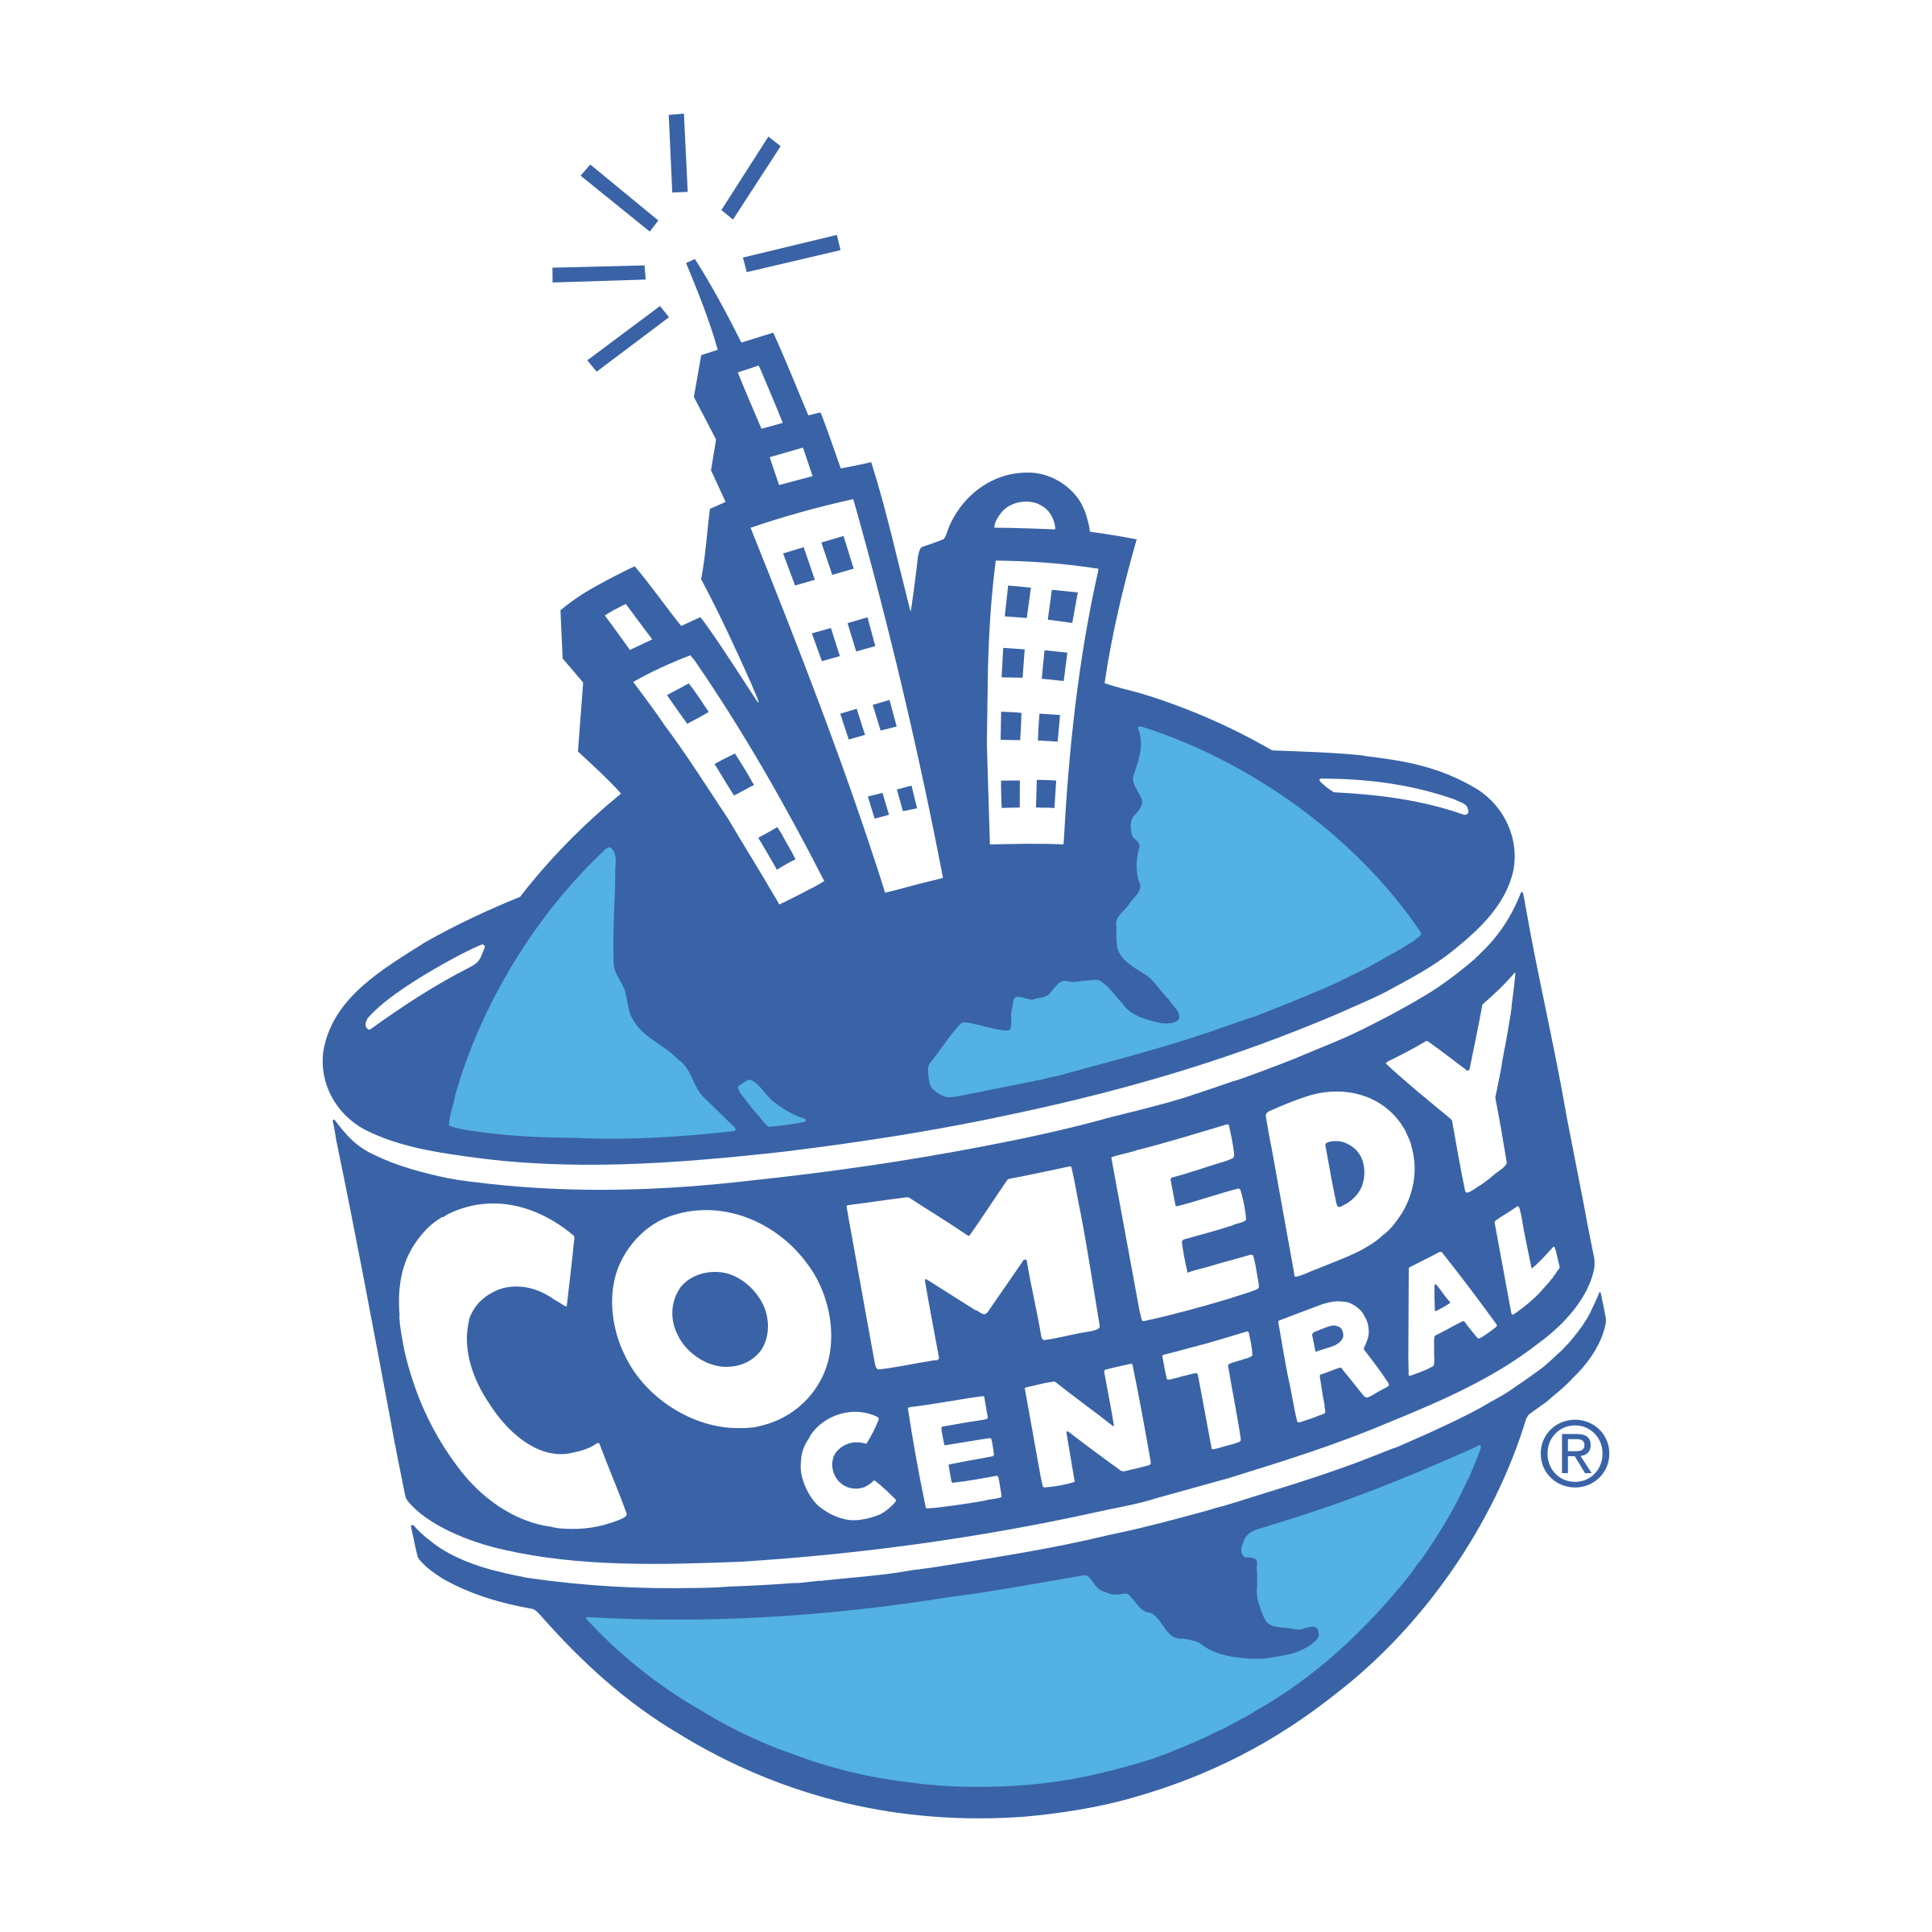 comedy-central-logo-png-transparent.png